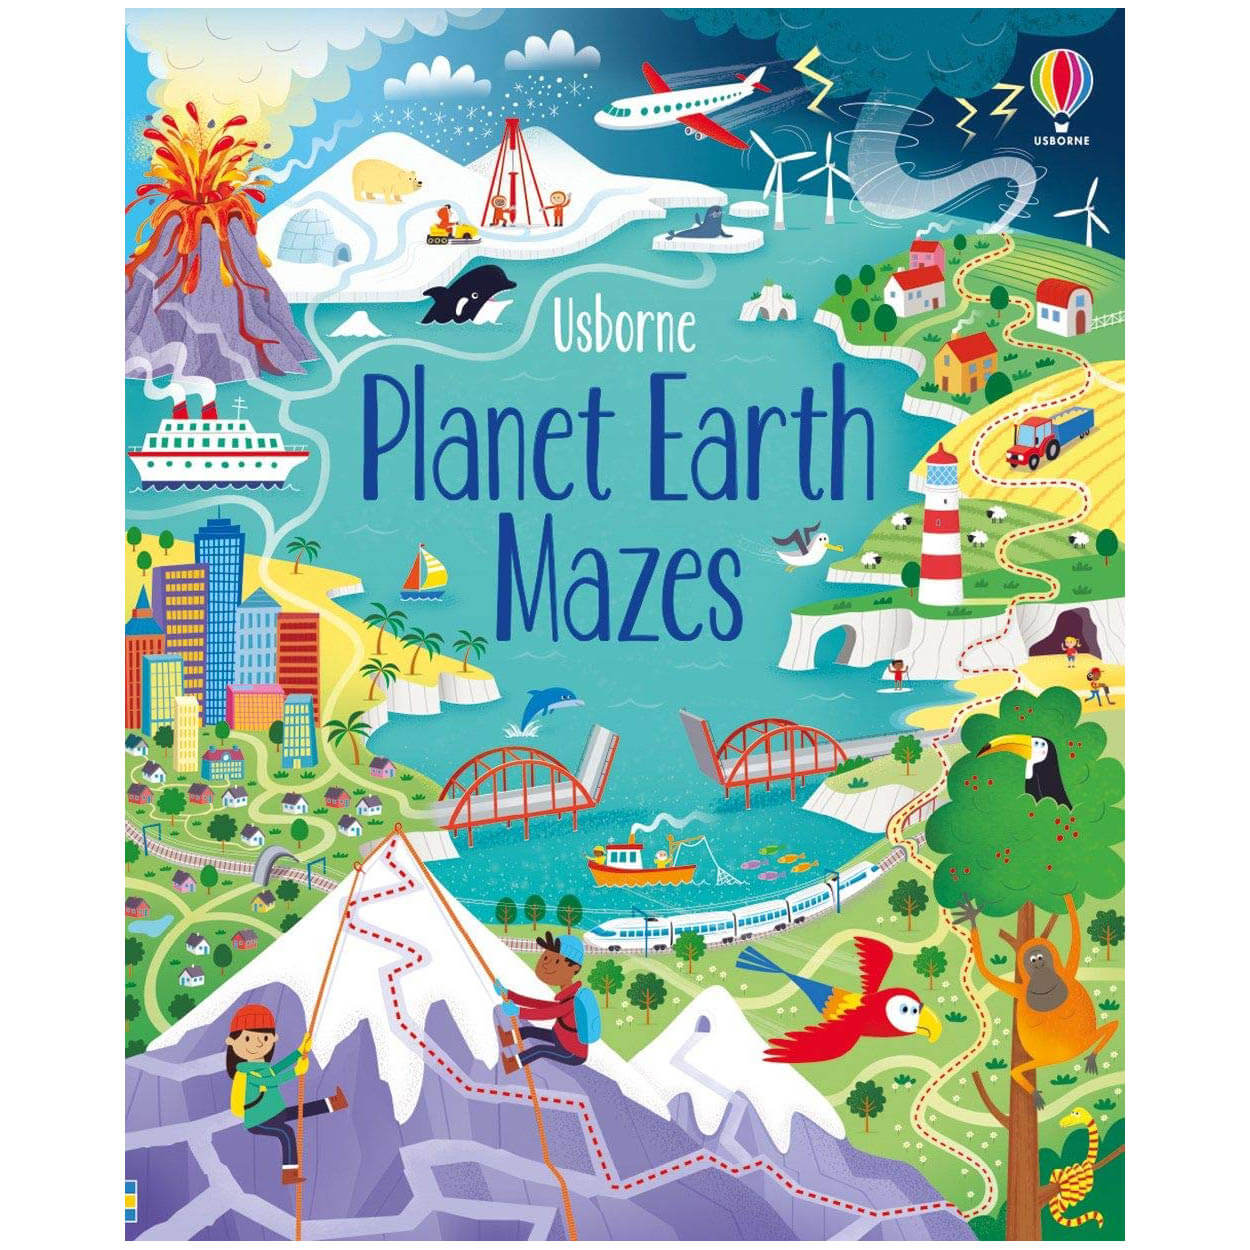 Usborne Planet Earth Mazes (Maze Books)